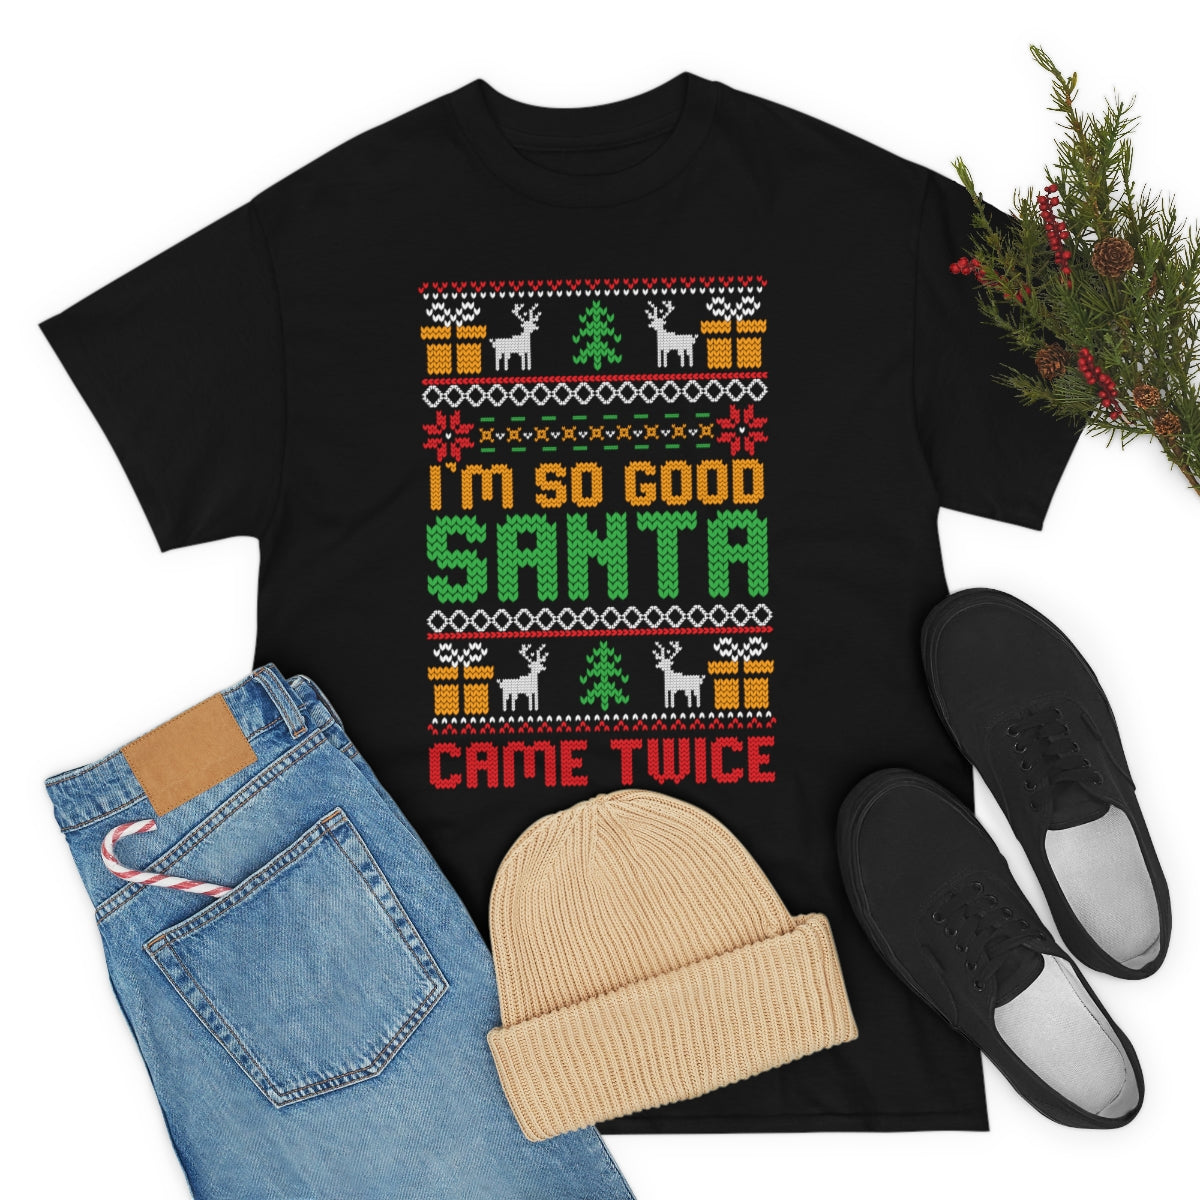 I am so good Santa came twice funny ugly Christmas T shirt